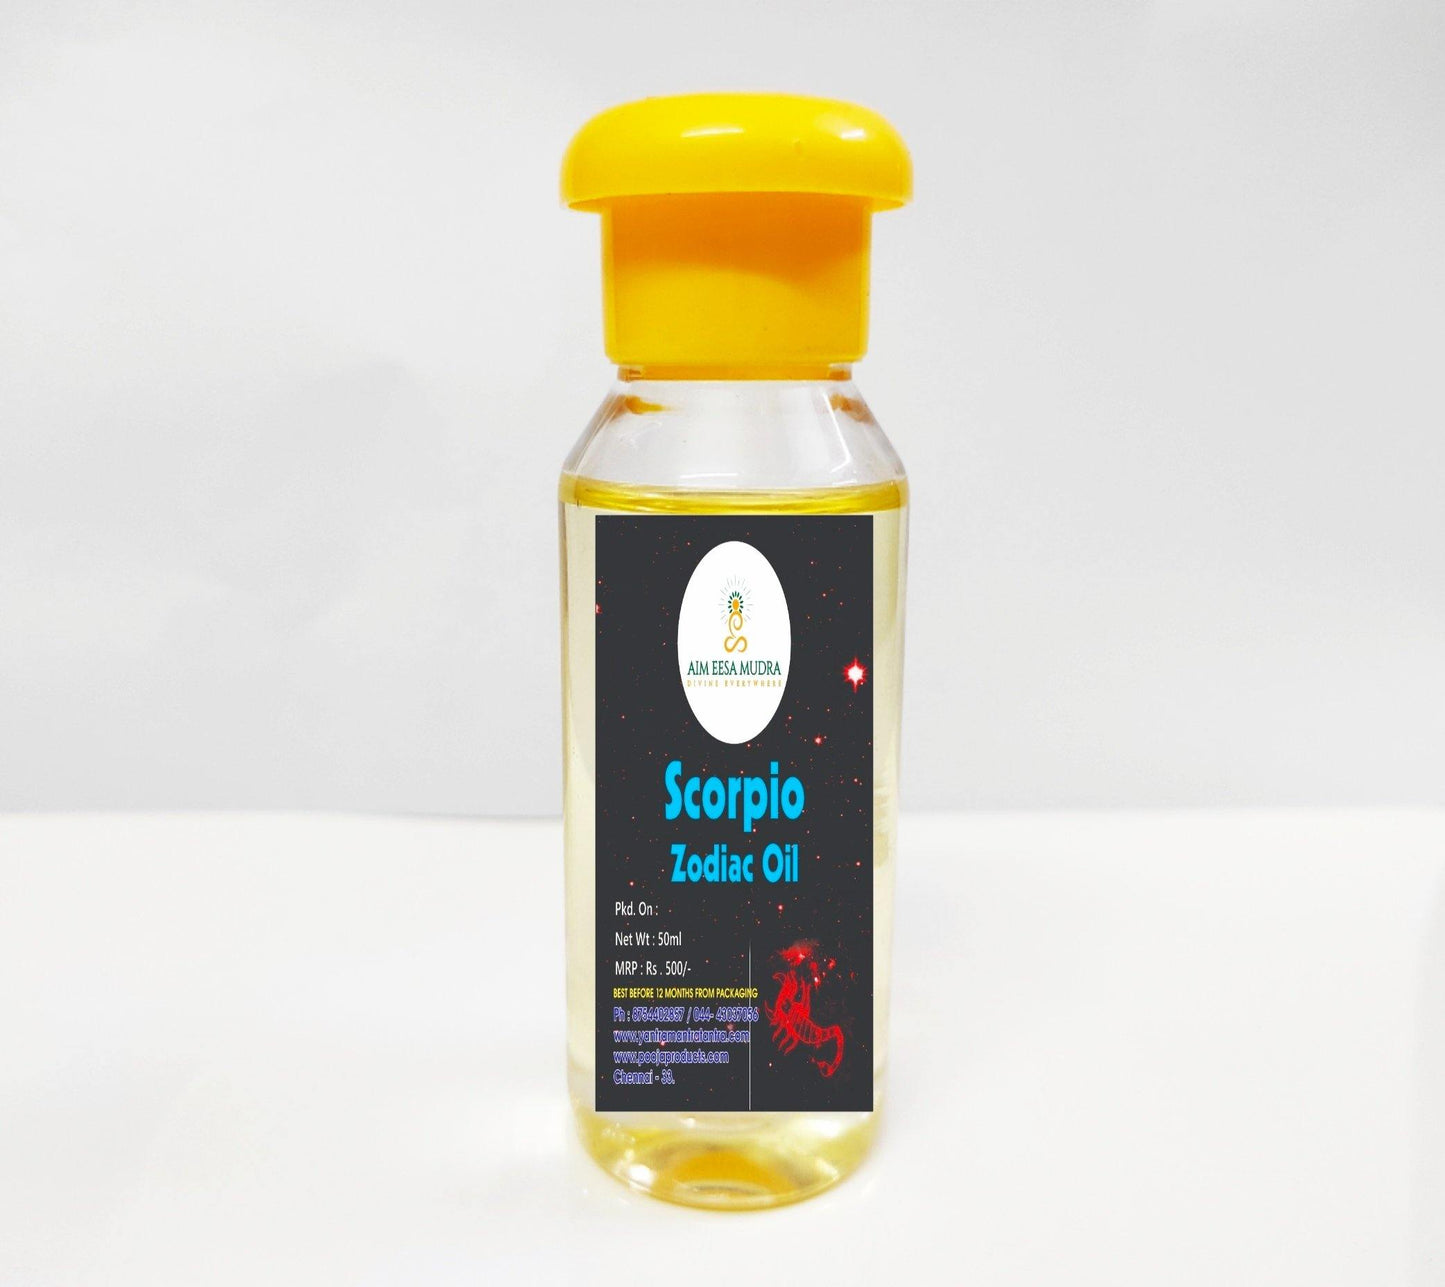 Zodiac Oil Scorpio  (50ml)  (𝗧𝗛𝗜𝗦 𝗣𝗥𝗢𝗗𝗨𝗖𝗧 𝗔𝗩𝗔𝗜𝗟𝗕𝗟𝗘 𝗢𝗡𝗟𝗬 𝗜𝗡𝗦𝗜𝗗𝗘 𝗜𝗡𝗗𝗜𝗔) - PoojaProducts.com